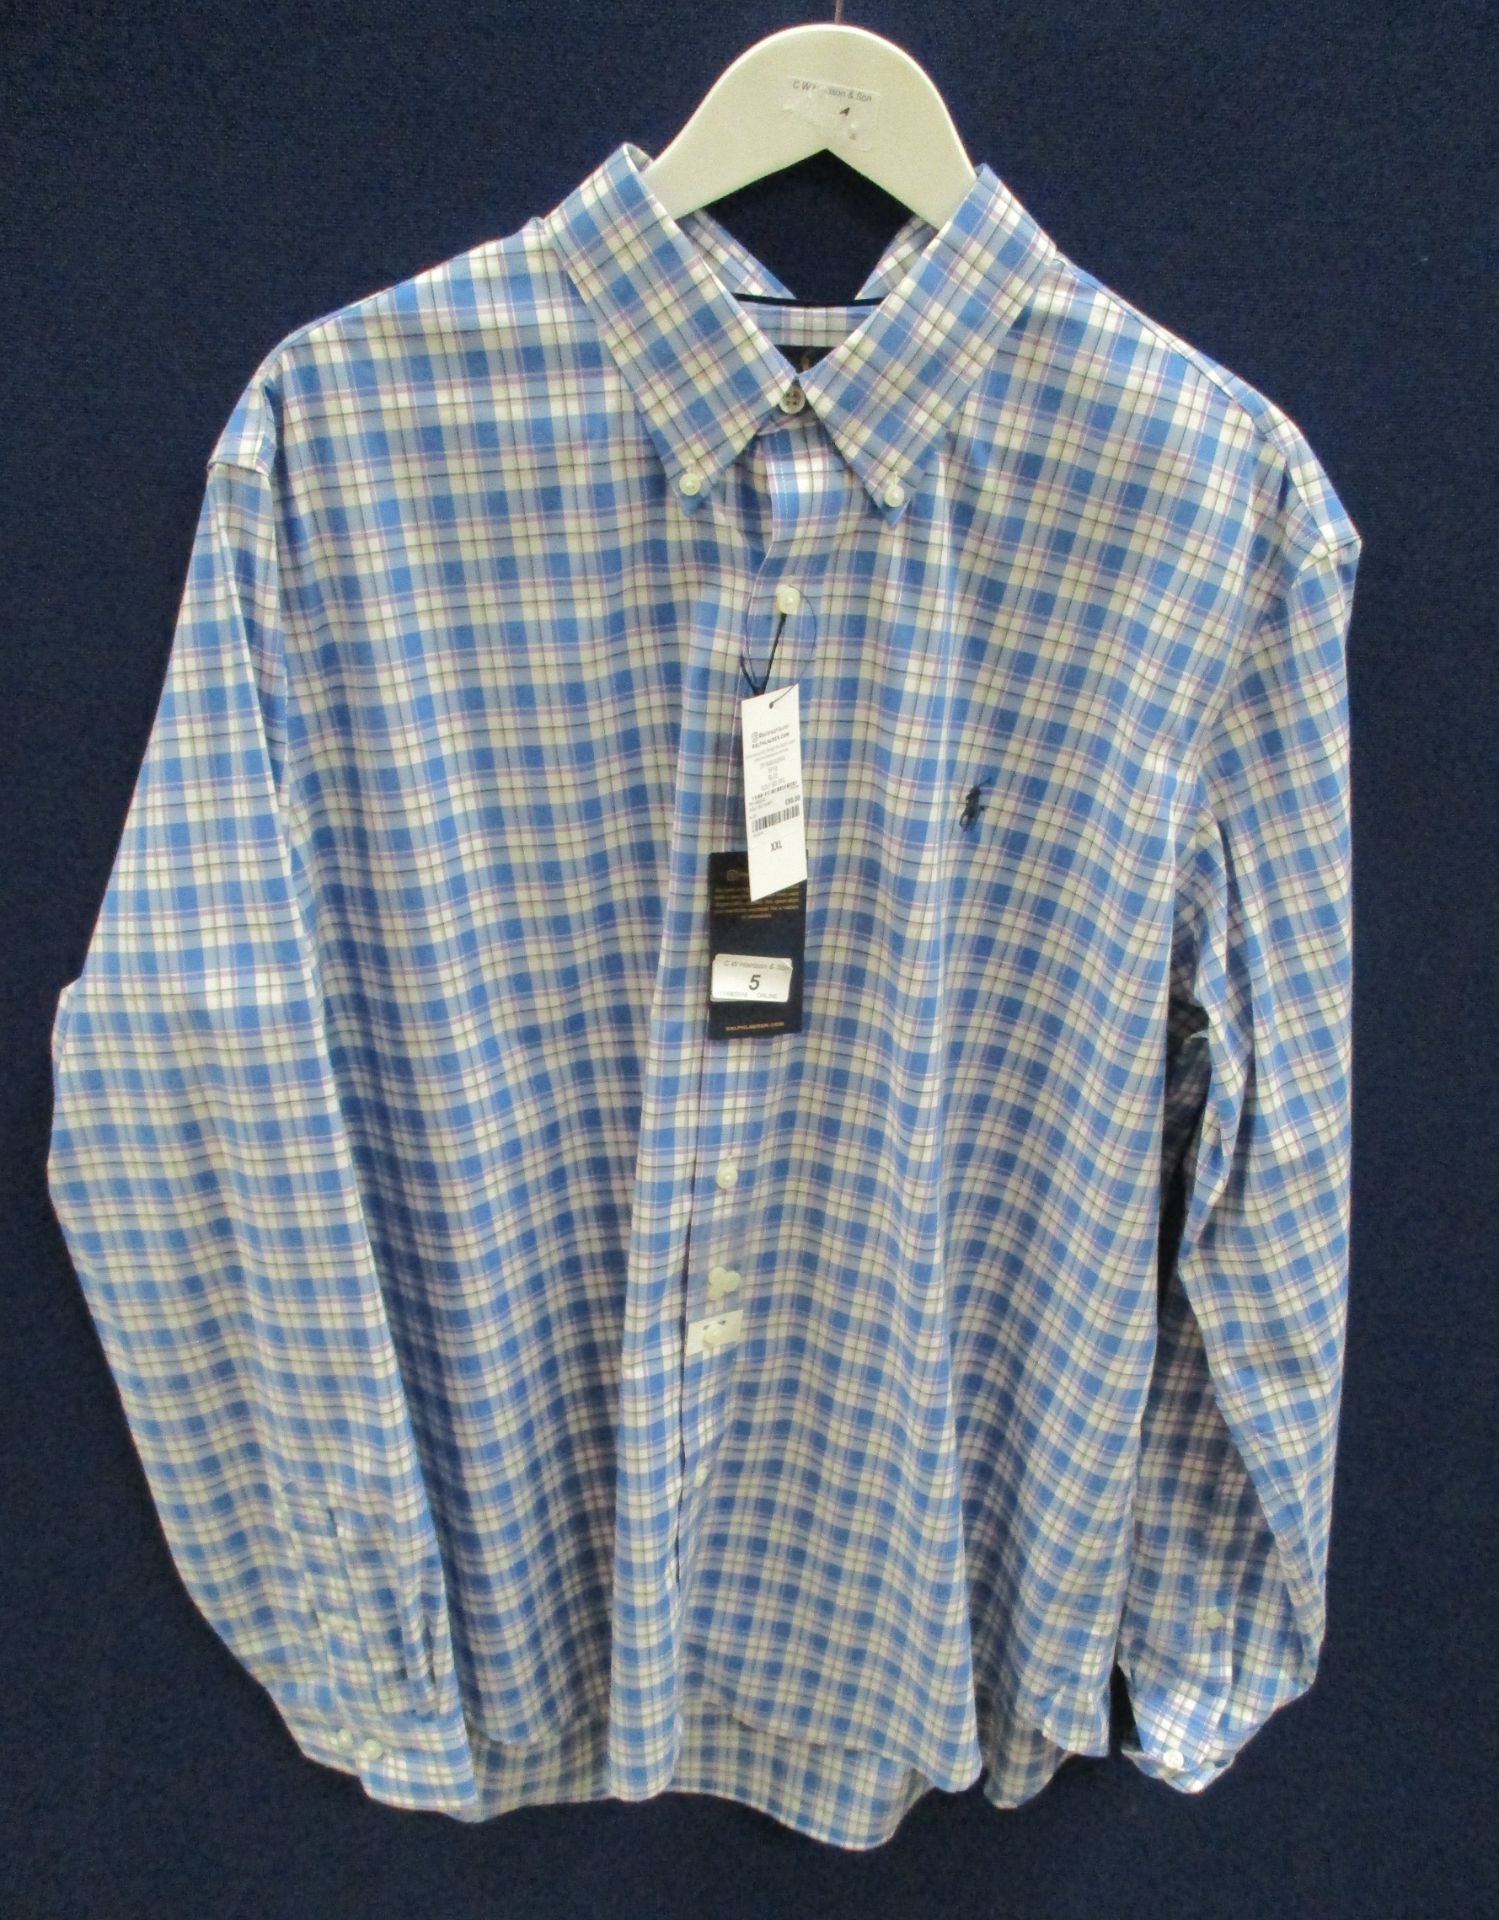 Ralph Lauren checked long sleeve shirt - blue and white - XXL RRP £85